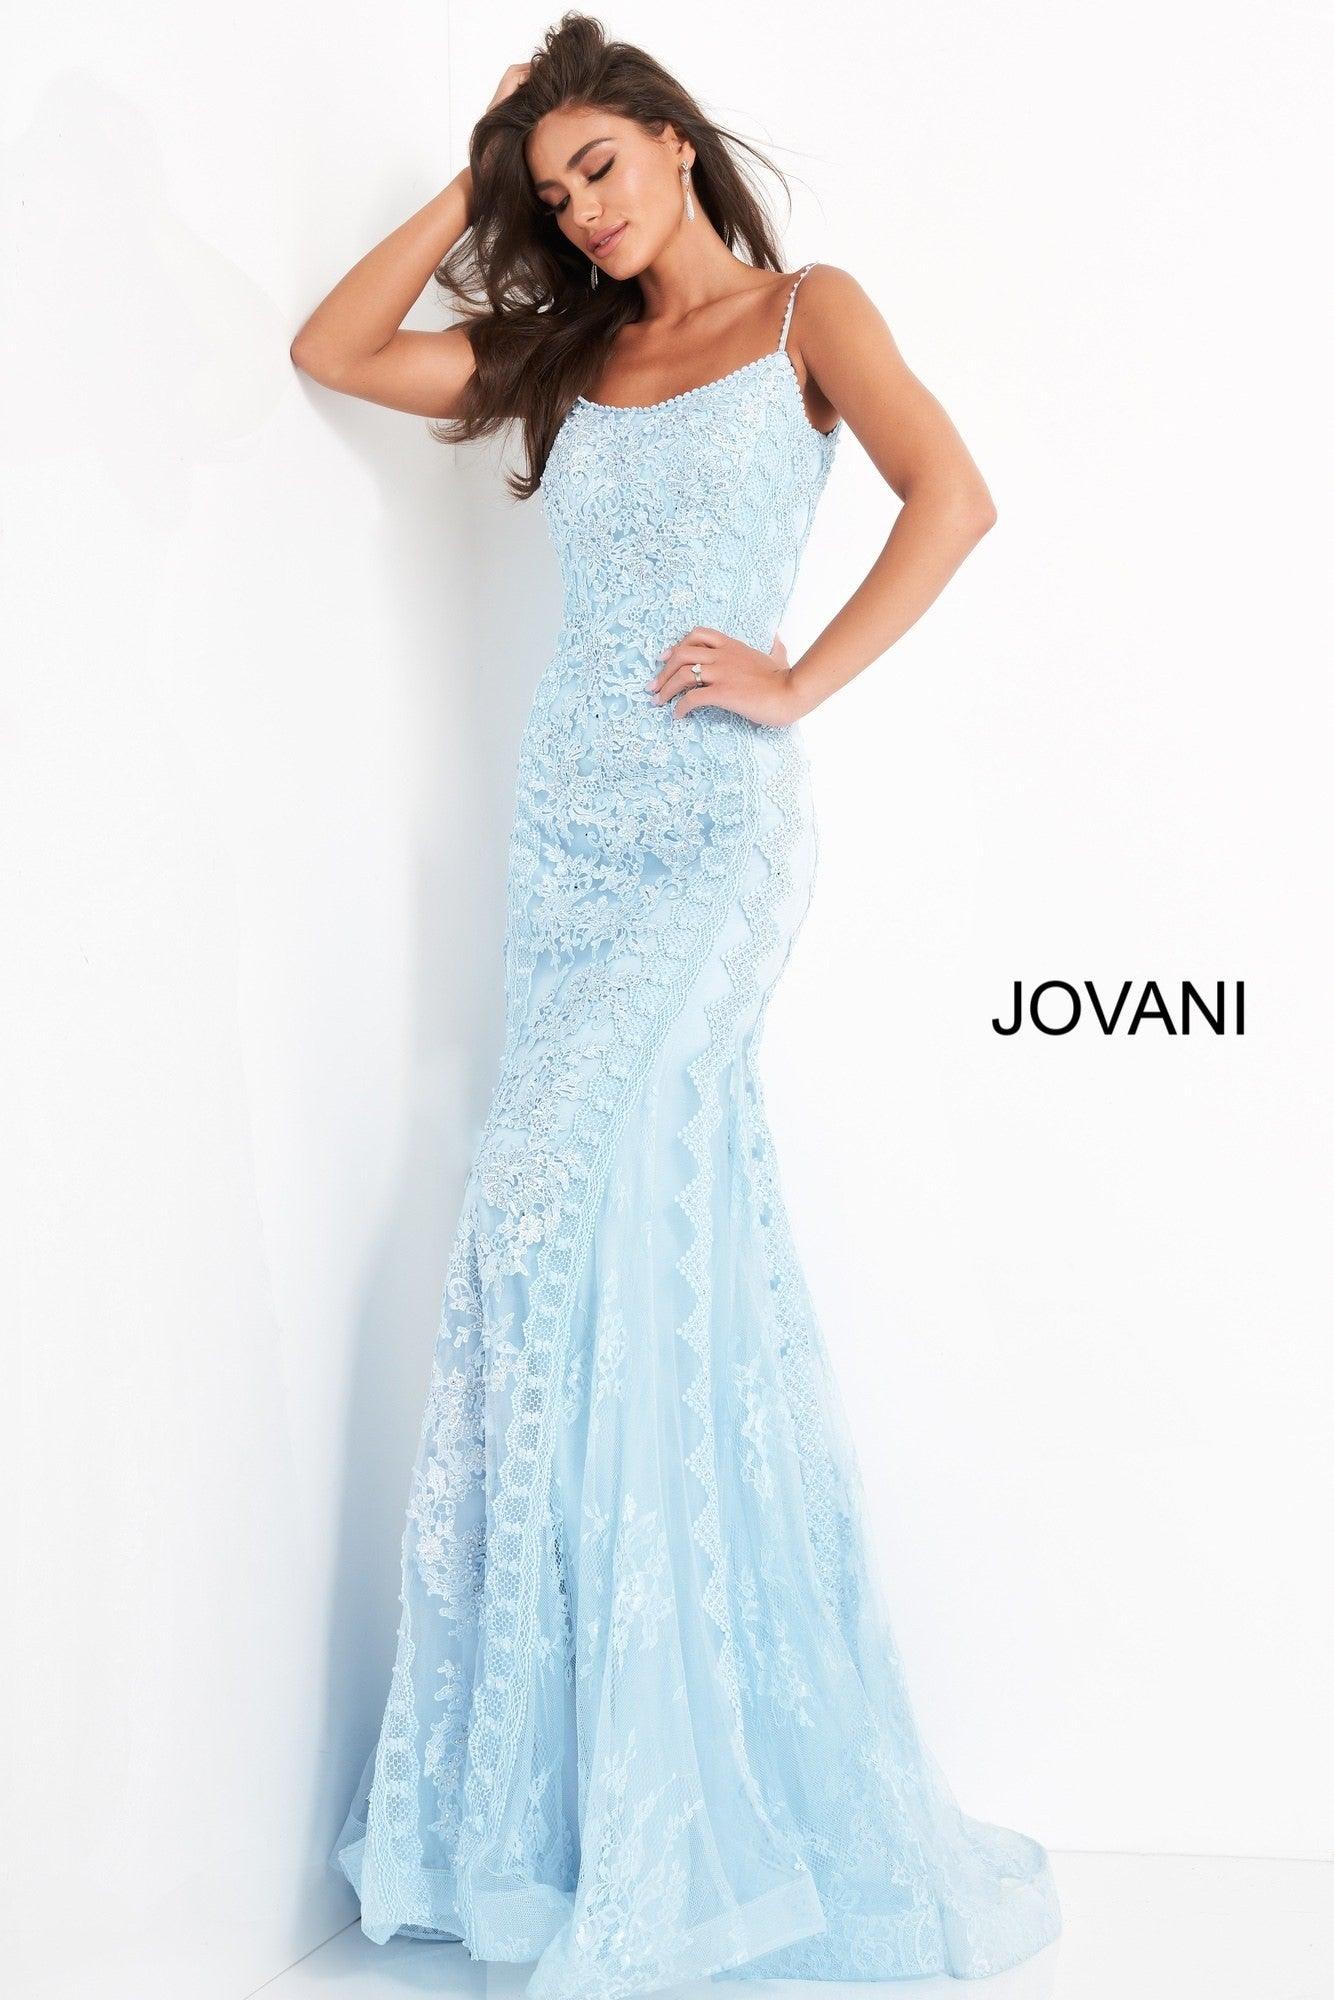 Jovani Spaghetti Straps Lace Prom Dress 00862 │ The Dress Outlet